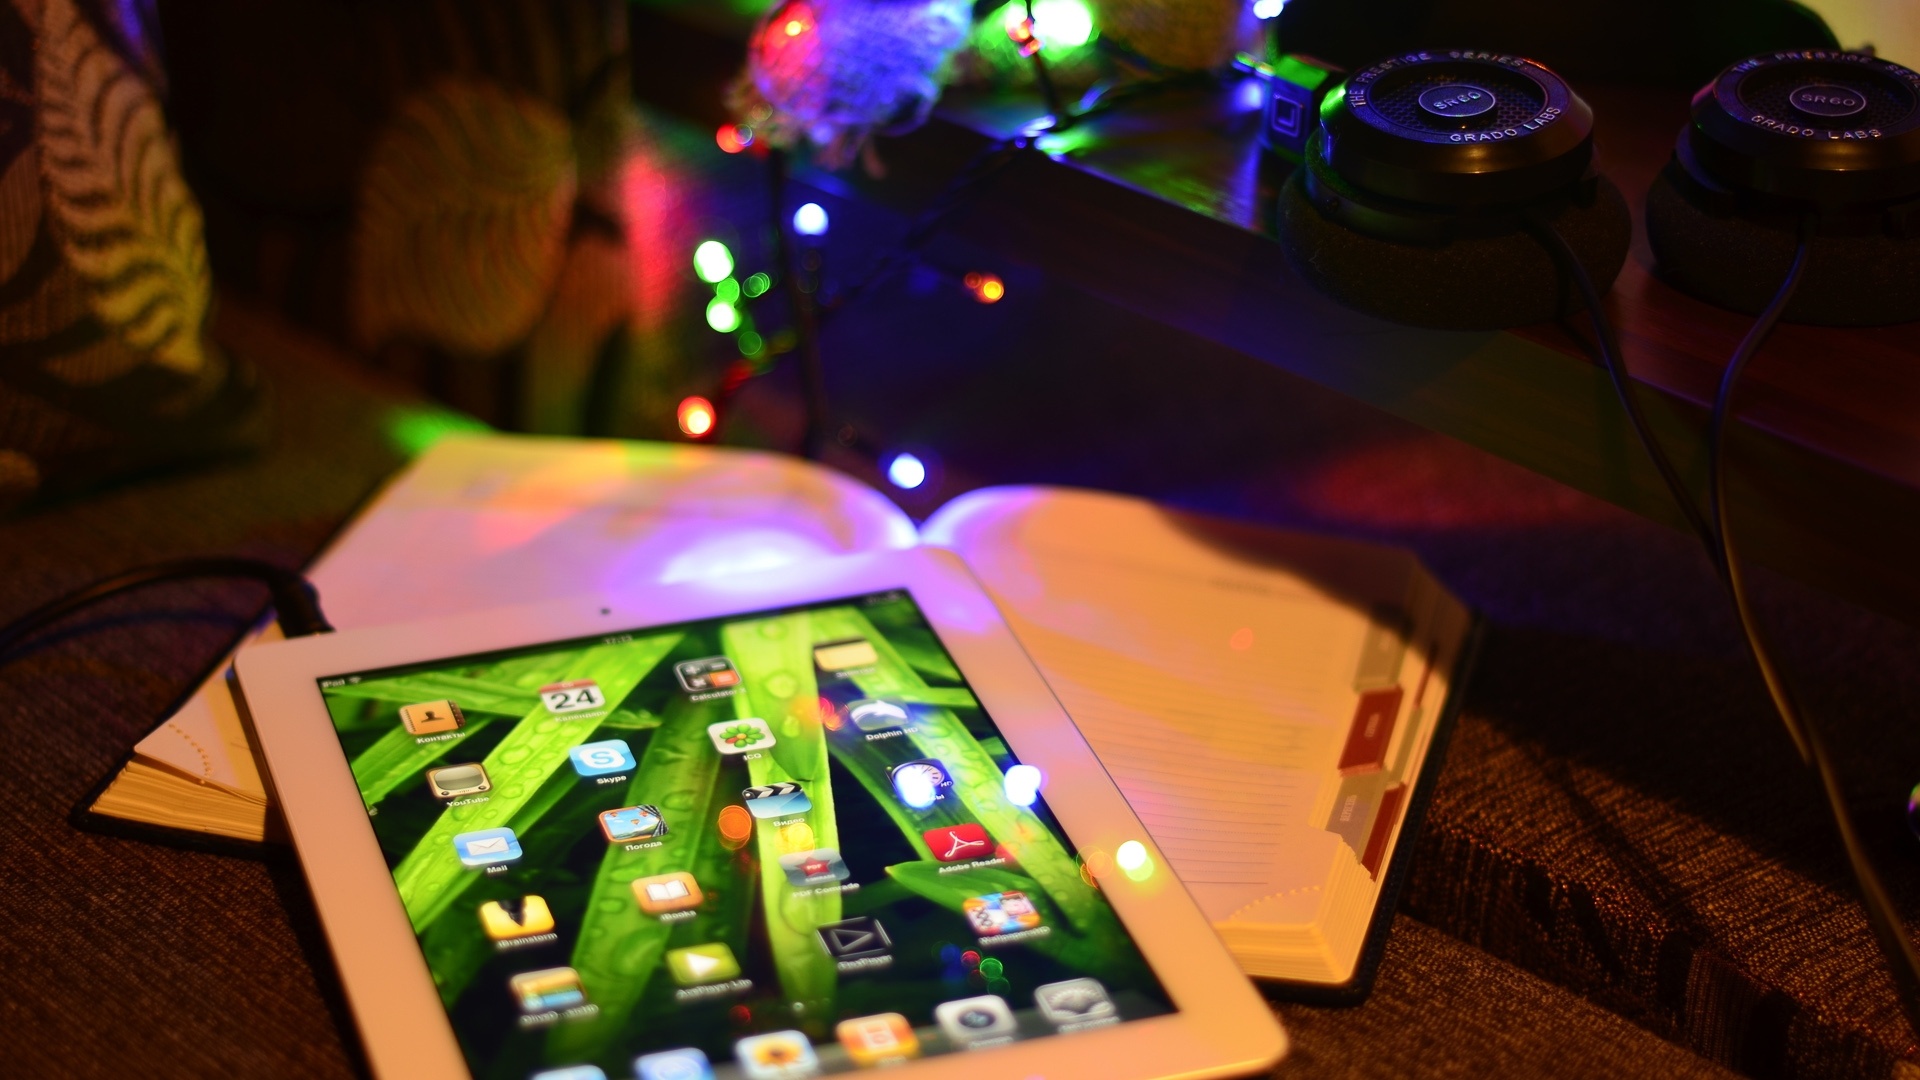 Holiday iPad gadget, Light colors, Festive lighting, New year's celebration, 1920x1080 Full HD Desktop